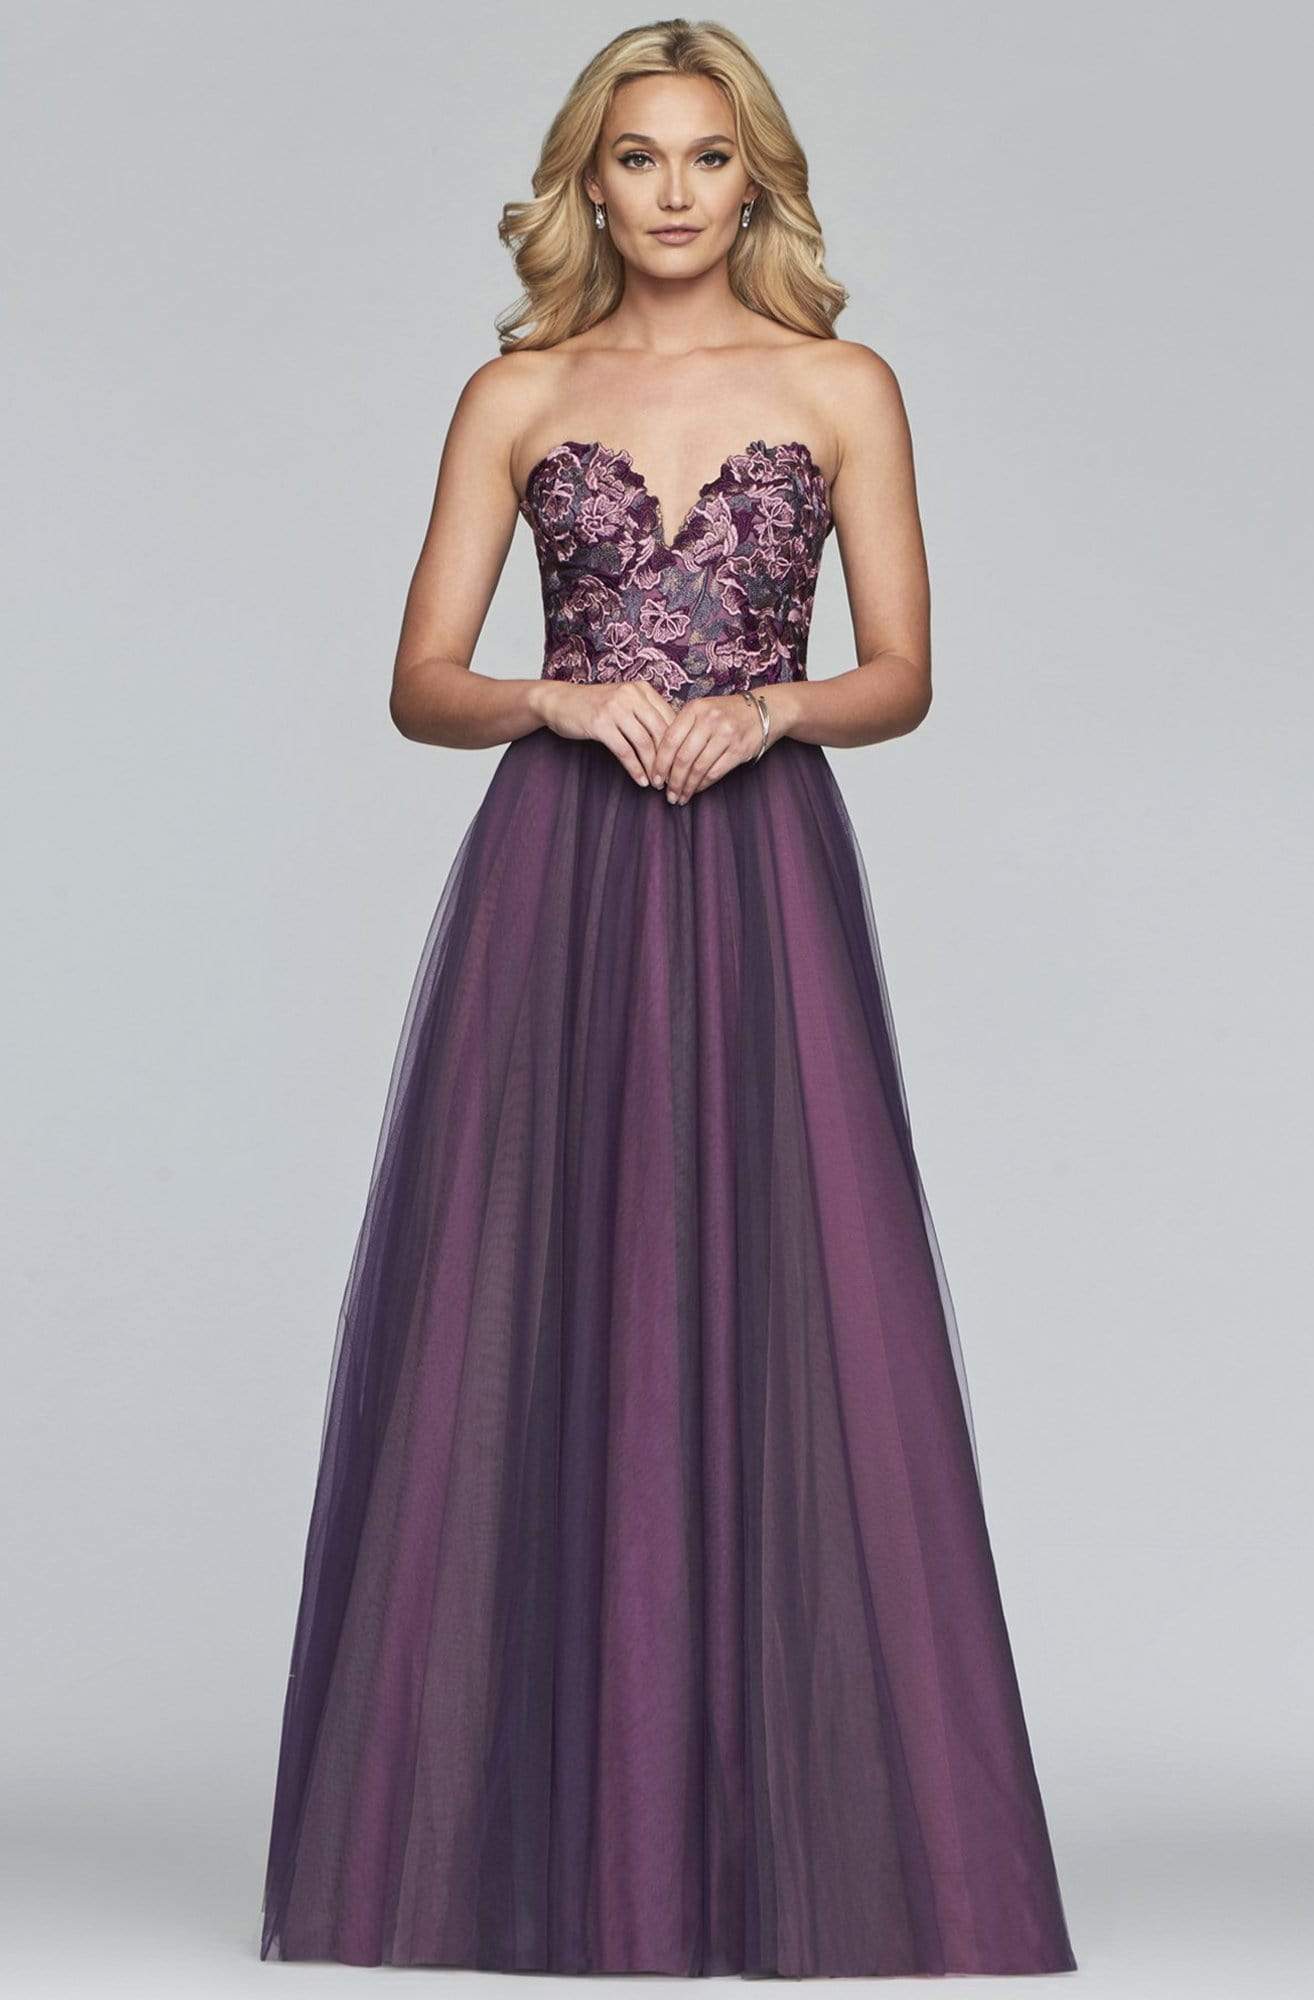 Faviana - s10023 Floral Applique Sweetheart A-line Dress Prom Dresses 00 / Sangria/Pink